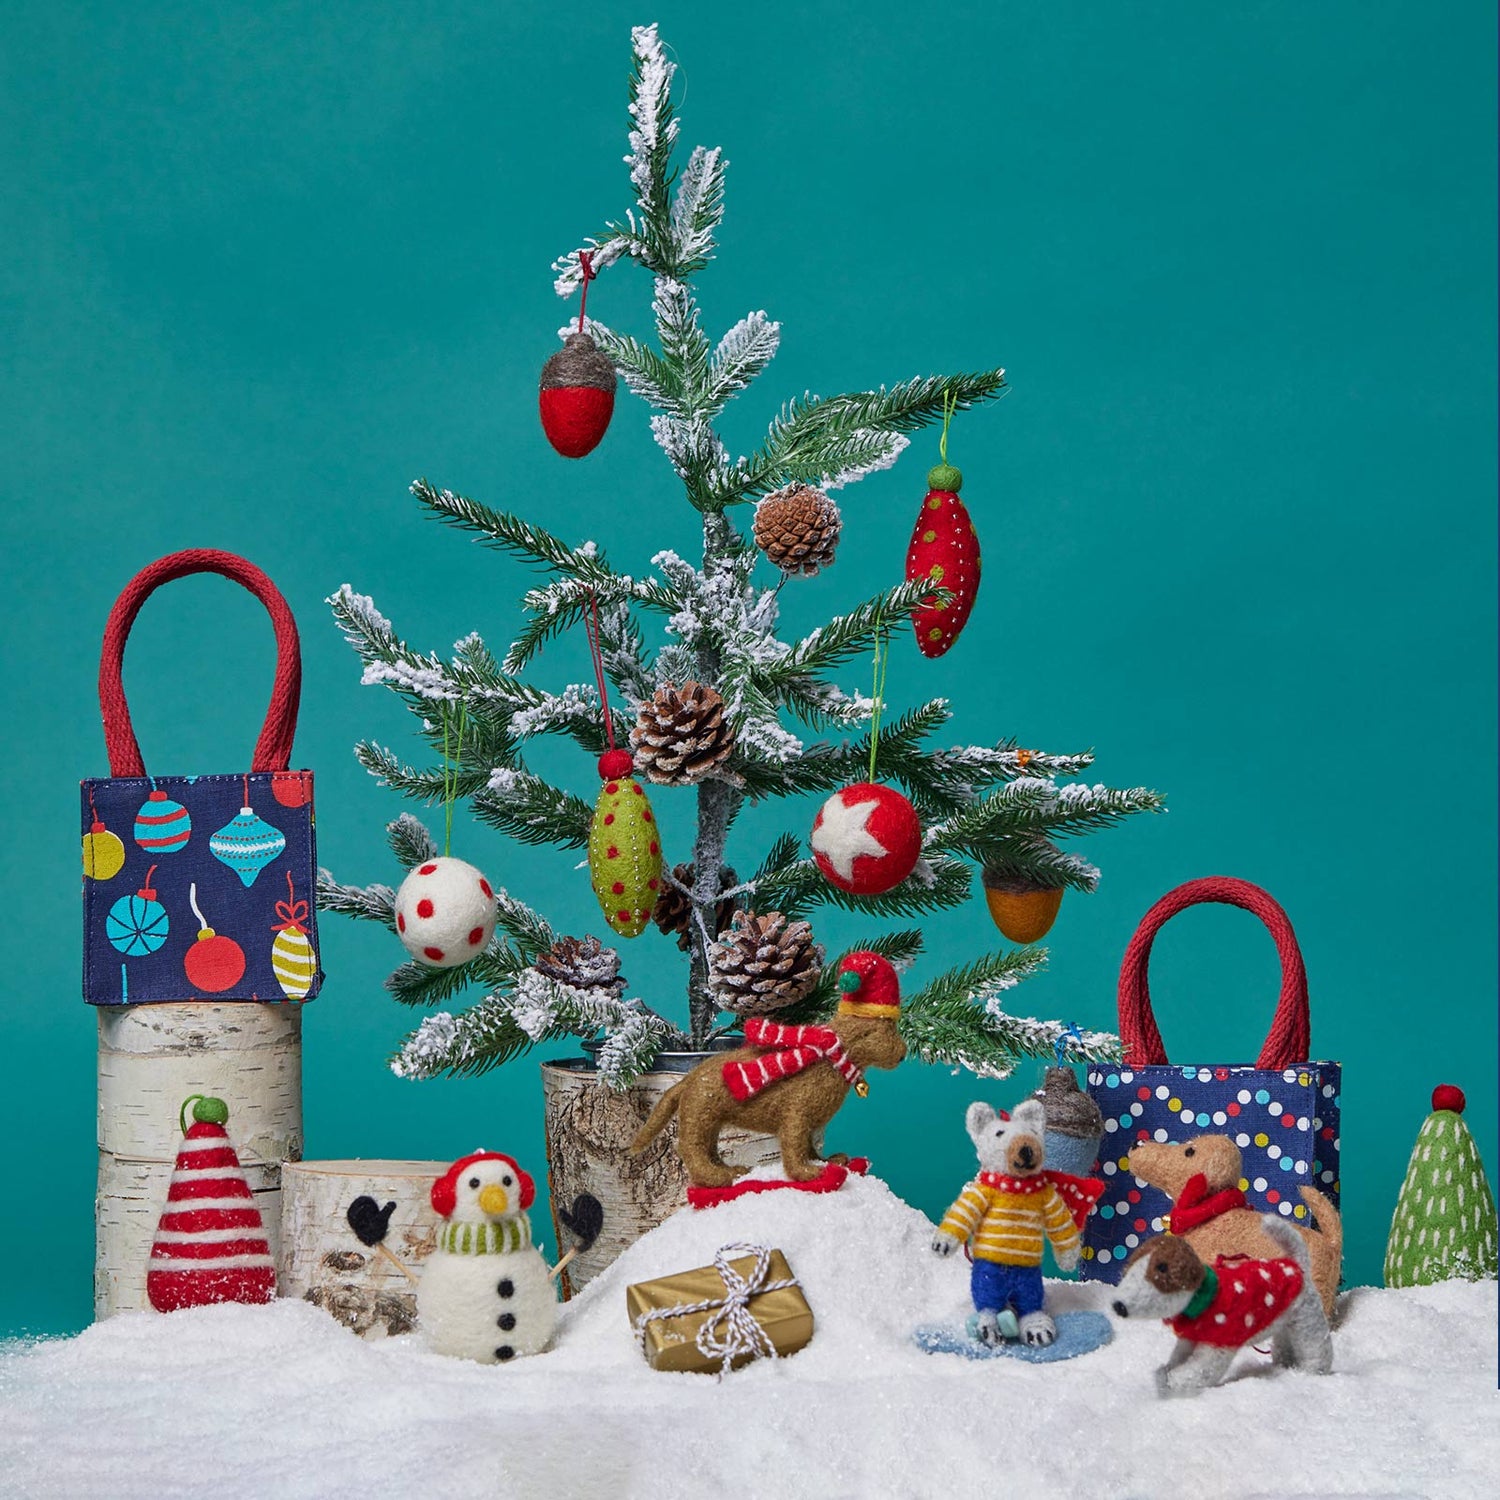 Red Holiday Tree Felt Ornament Ornament - rockflowerpaper